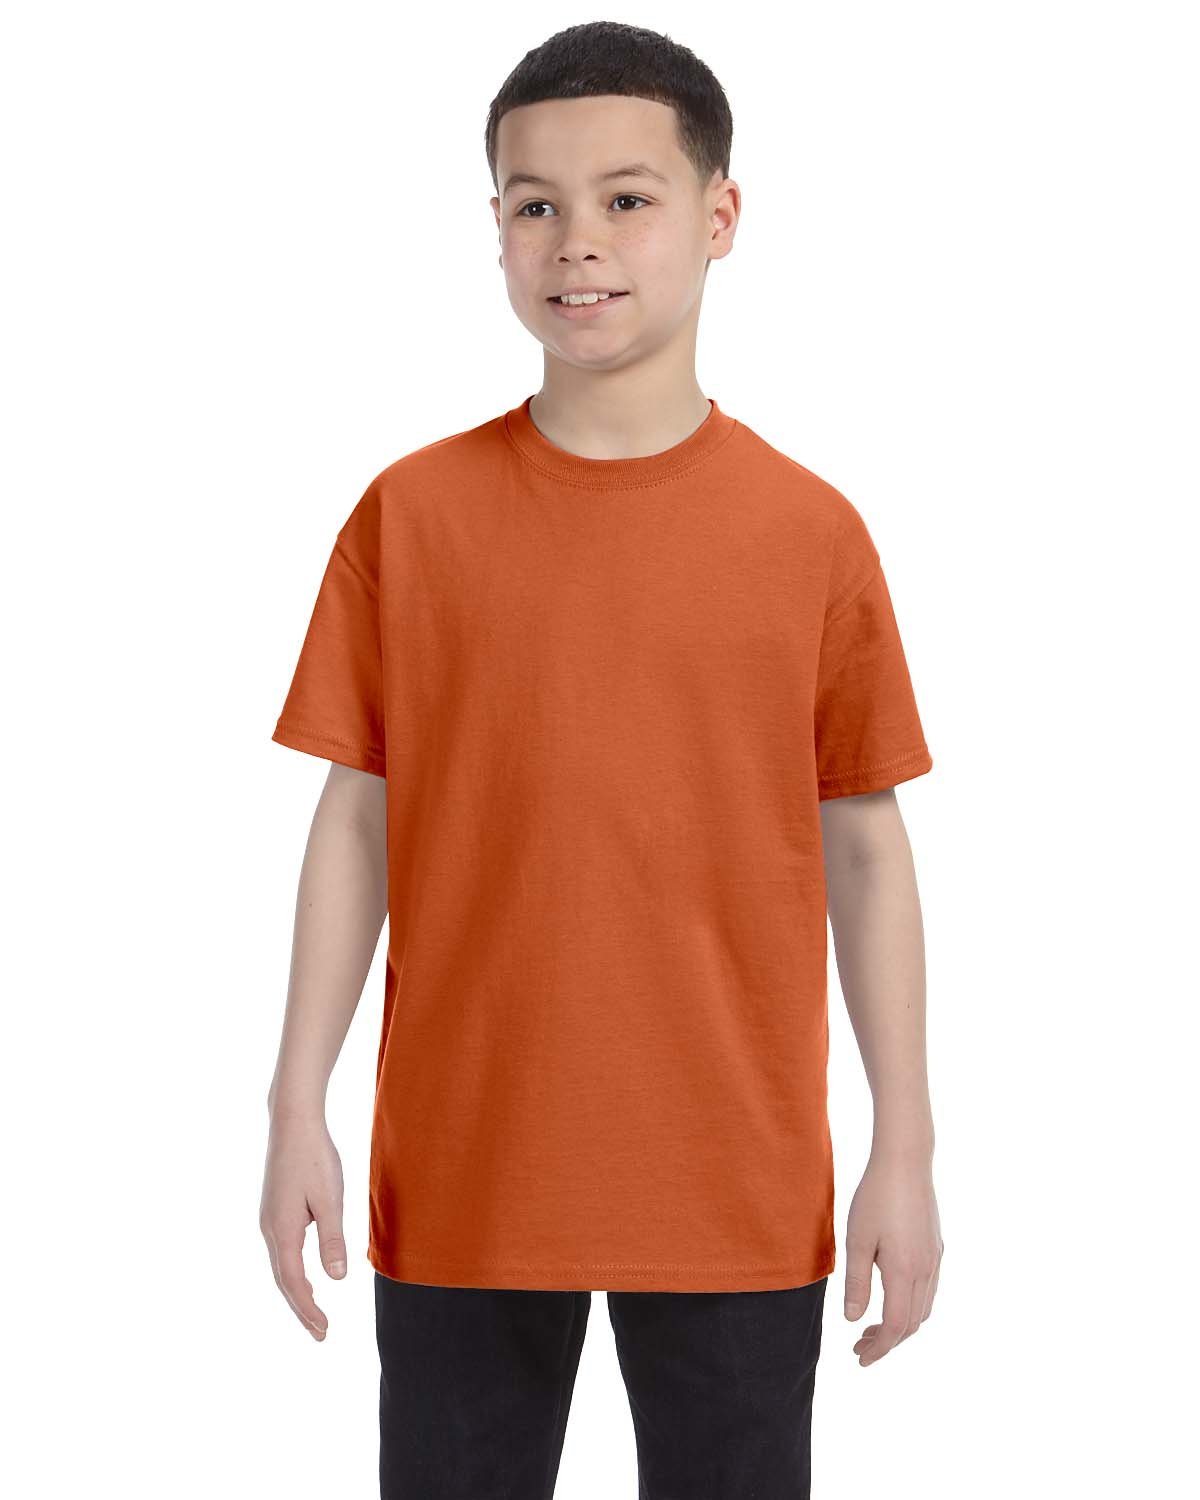 Buy Gildan Todler Boy's Heavy Cotton 5.3 oz. T-Shirt, White, 3T at